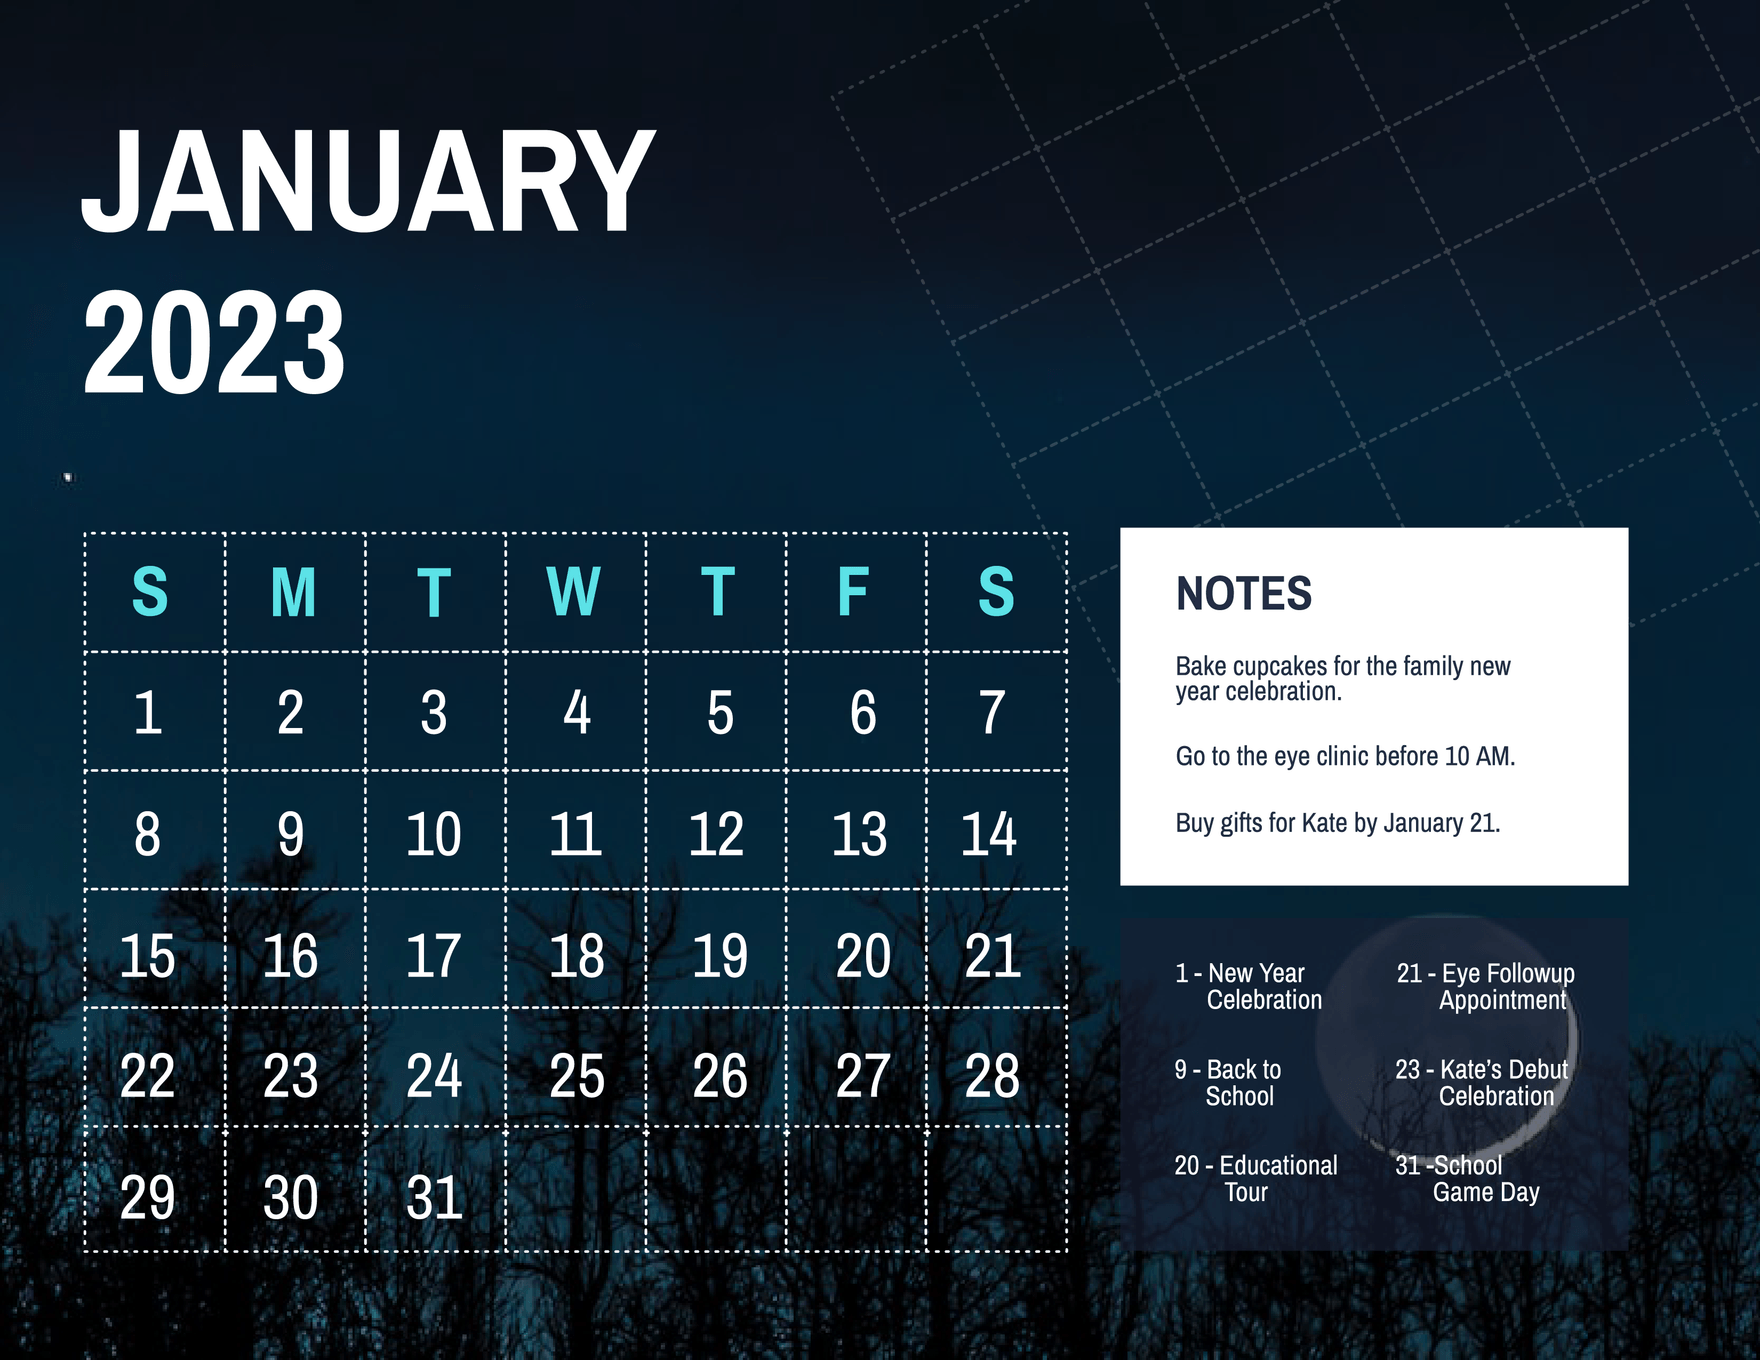 January 2023 Photo Calendar Template in Word, Illustrator, PSD